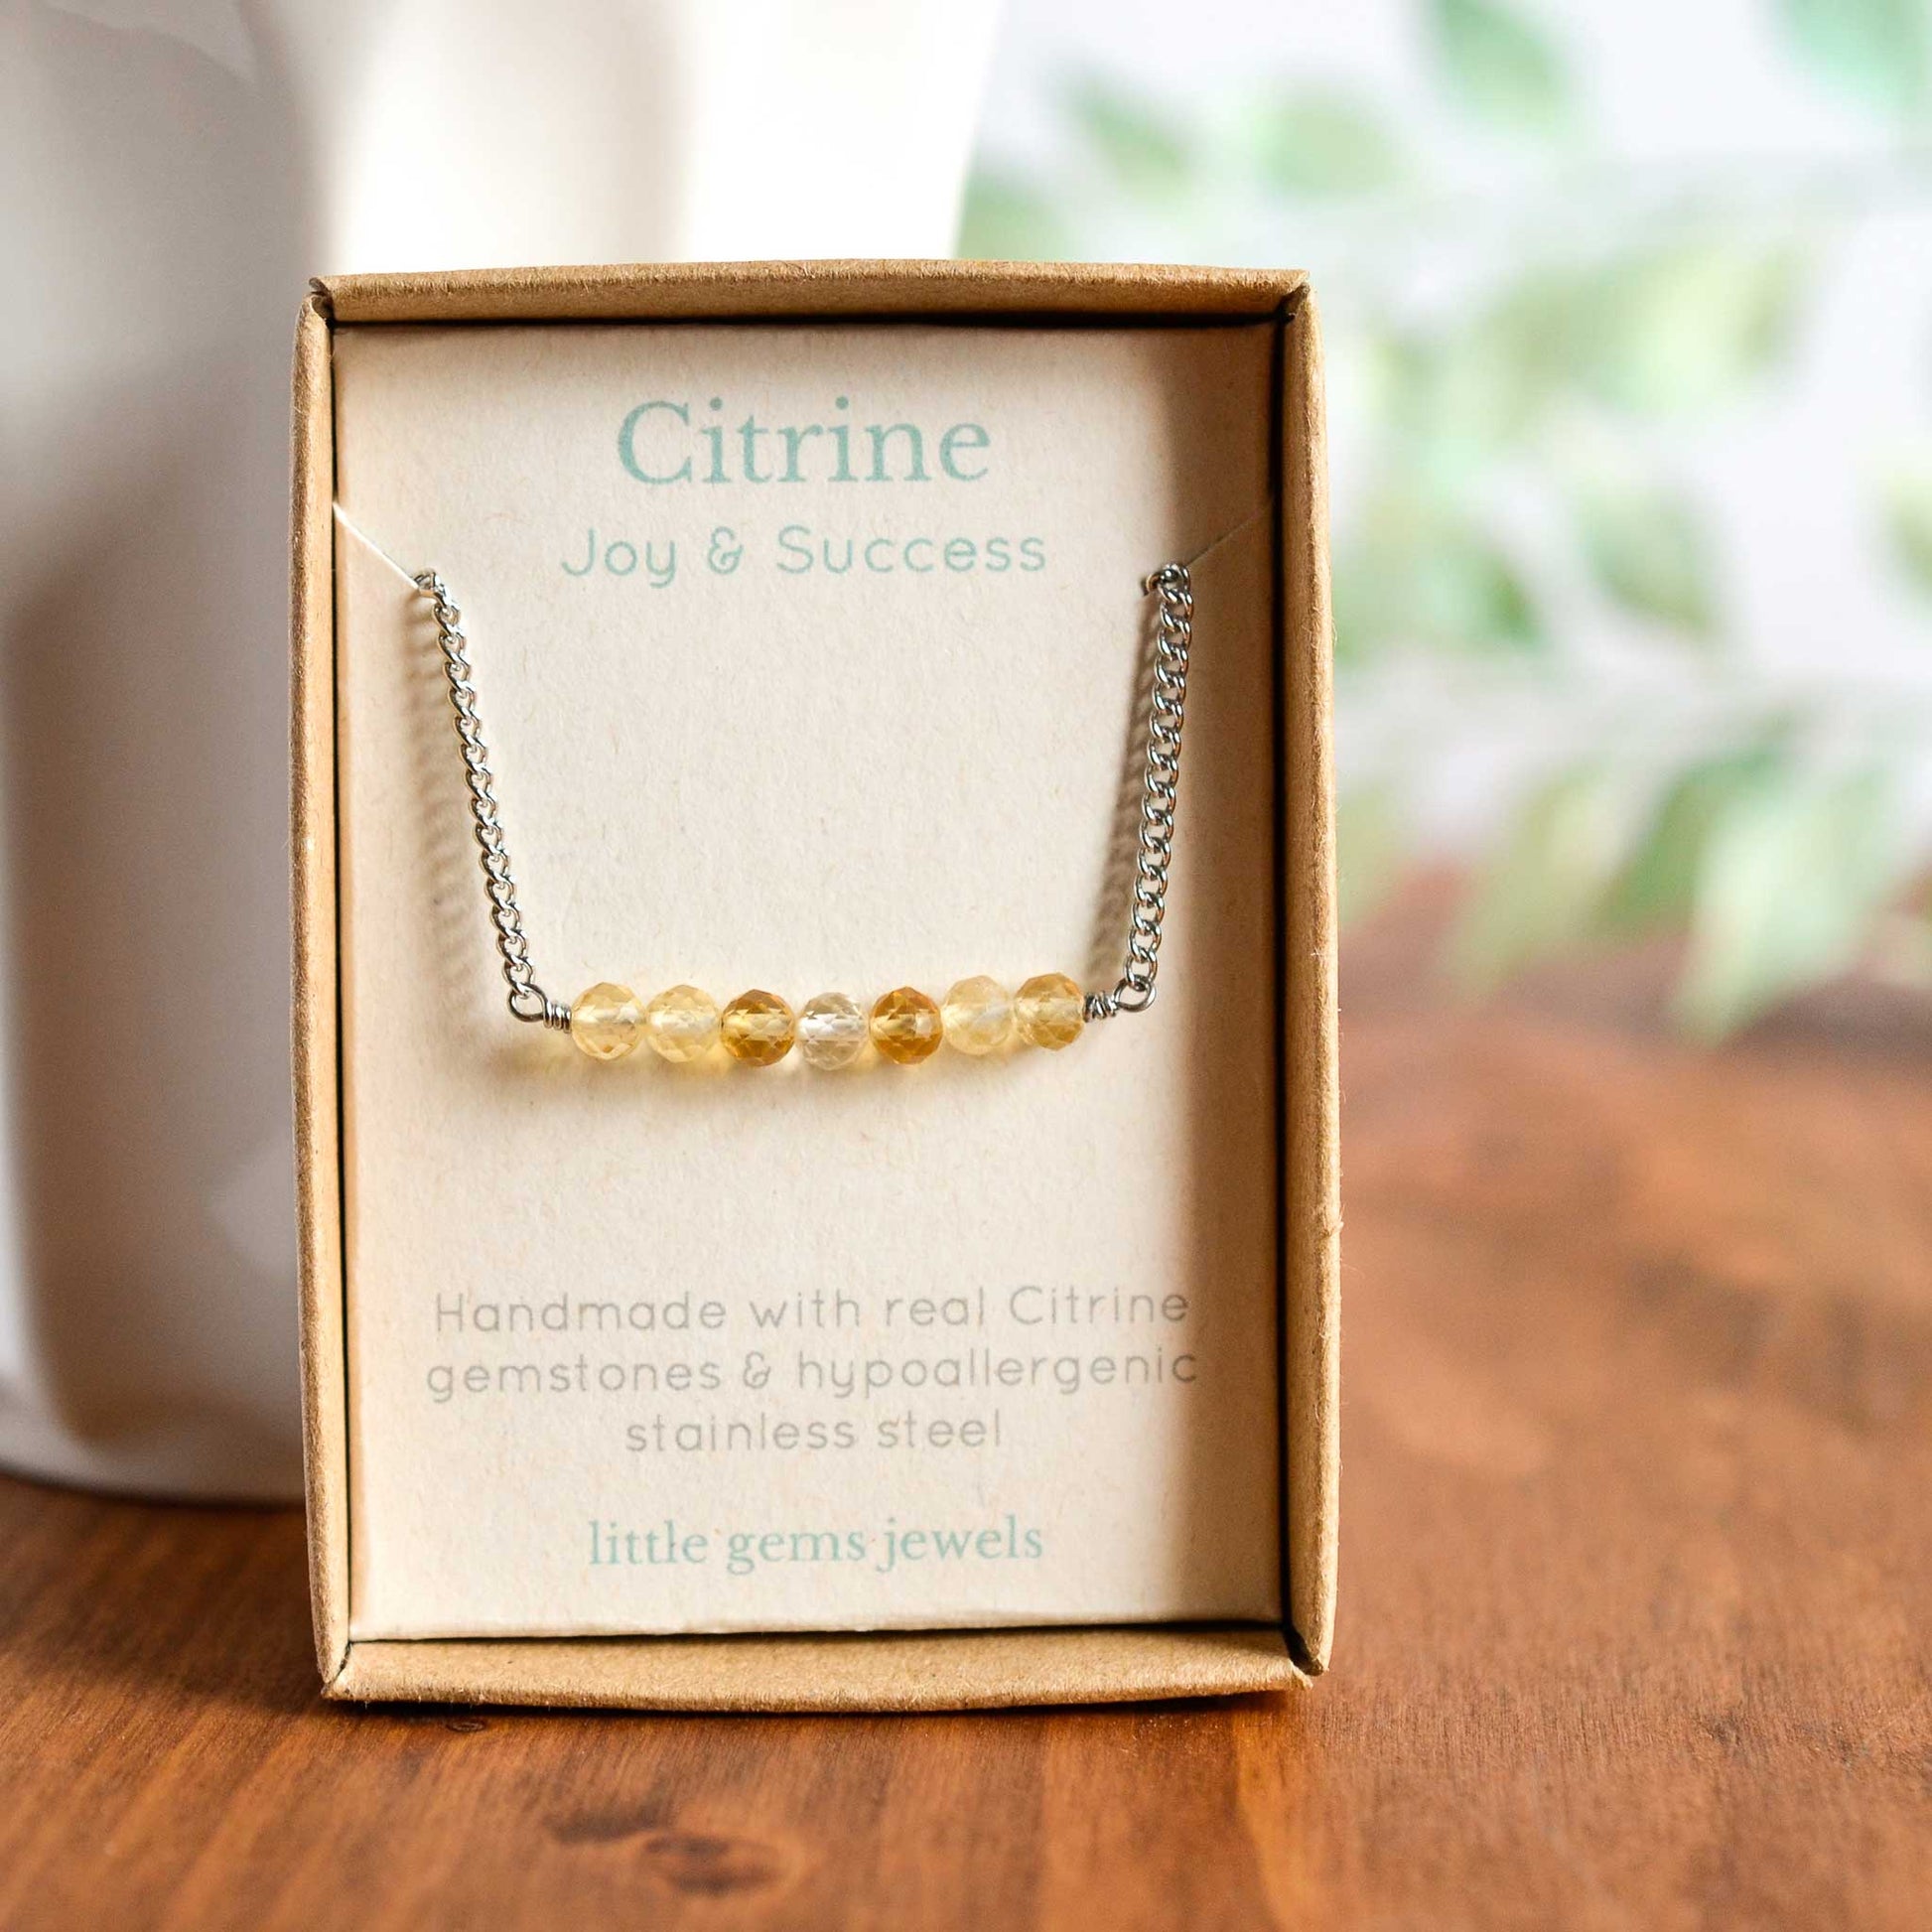 Dainty Citrine gemstone necklace in eco friendly gift box